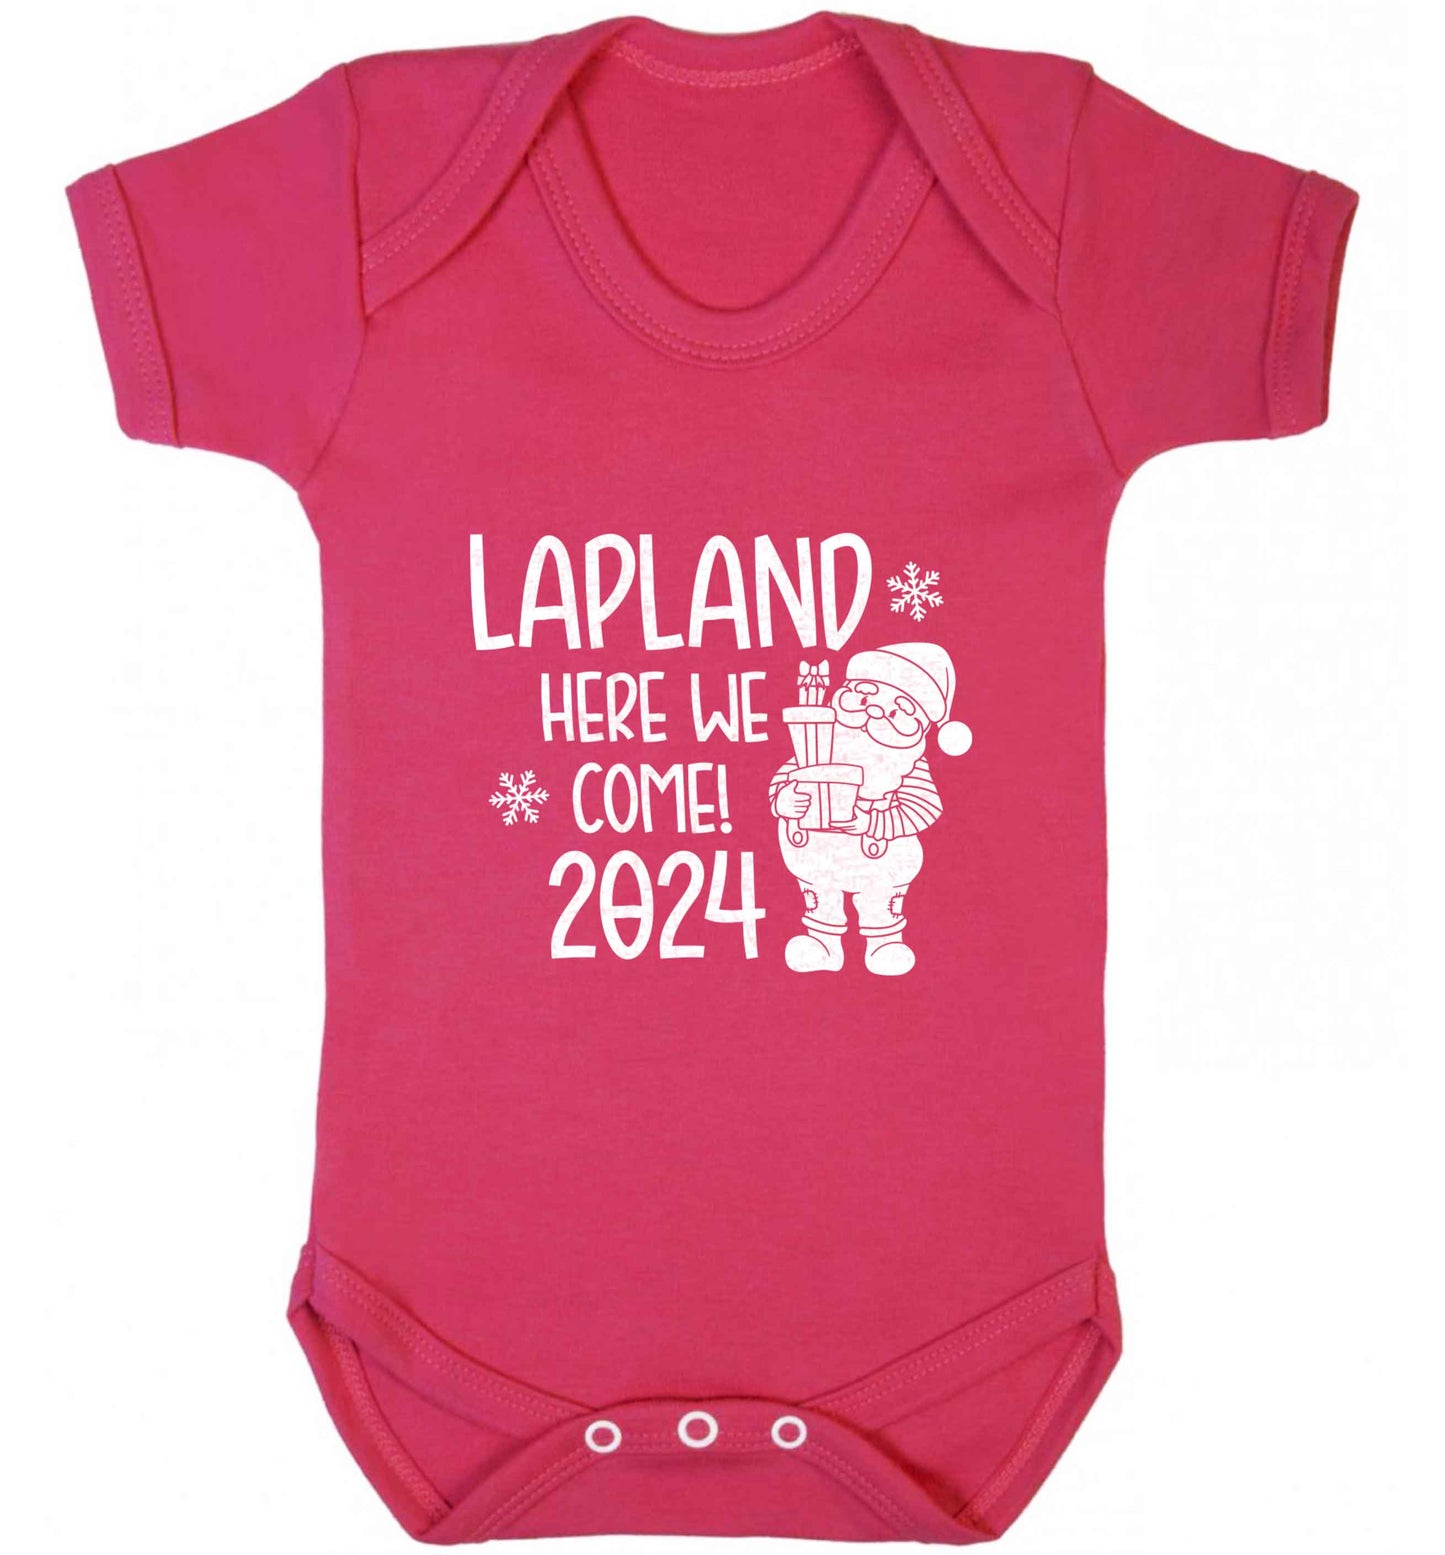 Lapland here we come baby vest dark pink 18-24 months